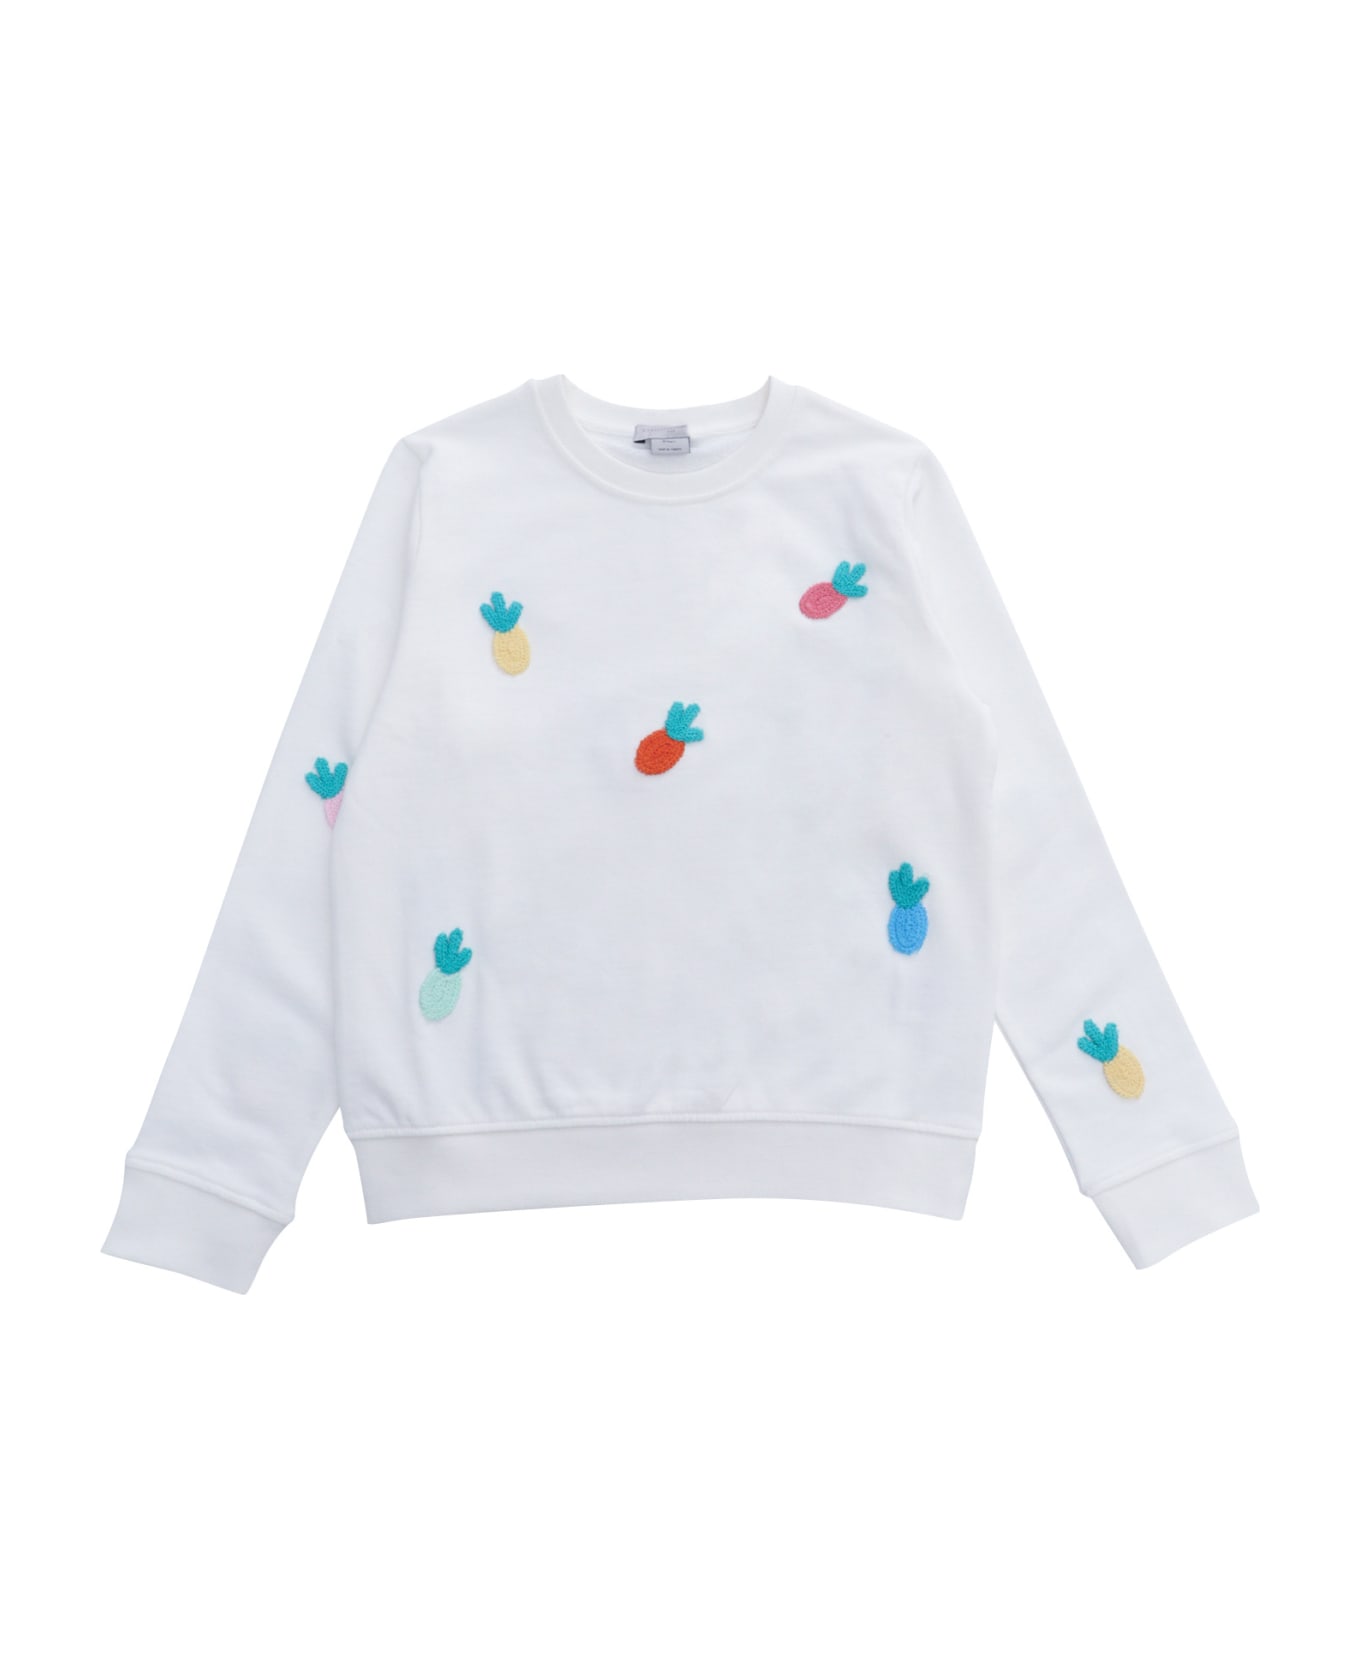 Stella McCartney Kids White Sweatshirt With Embroidery - WHITE